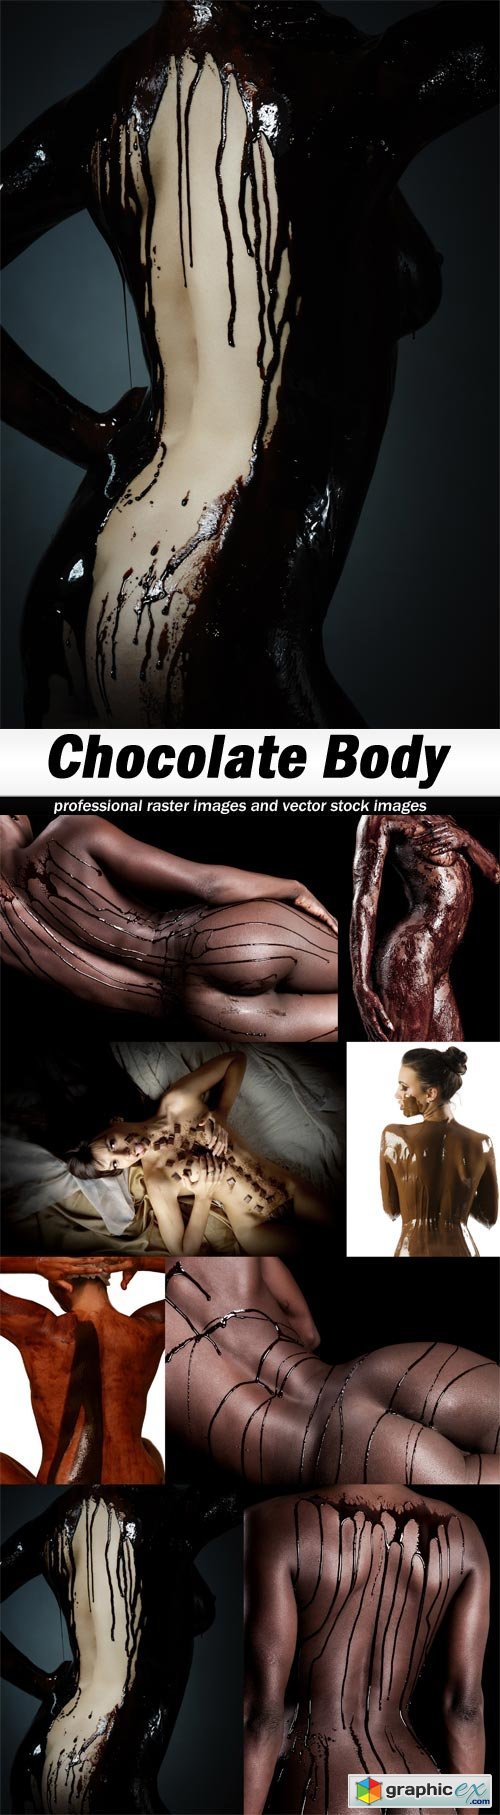 Chocolate Body - 8 UHQ JPEG